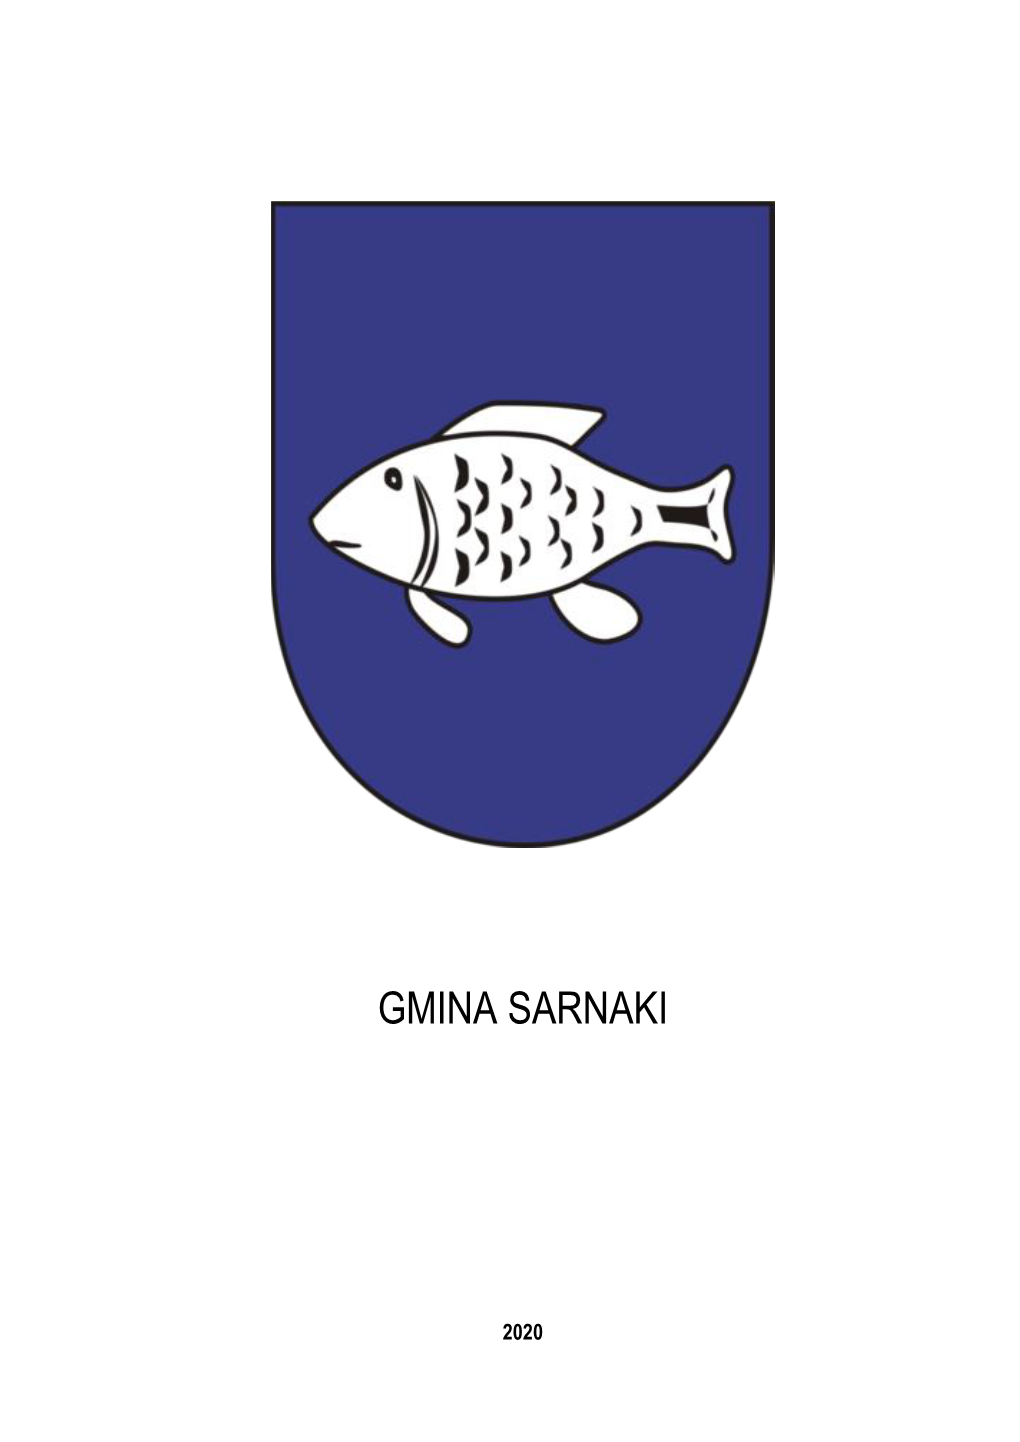 Gmina Sarnaki